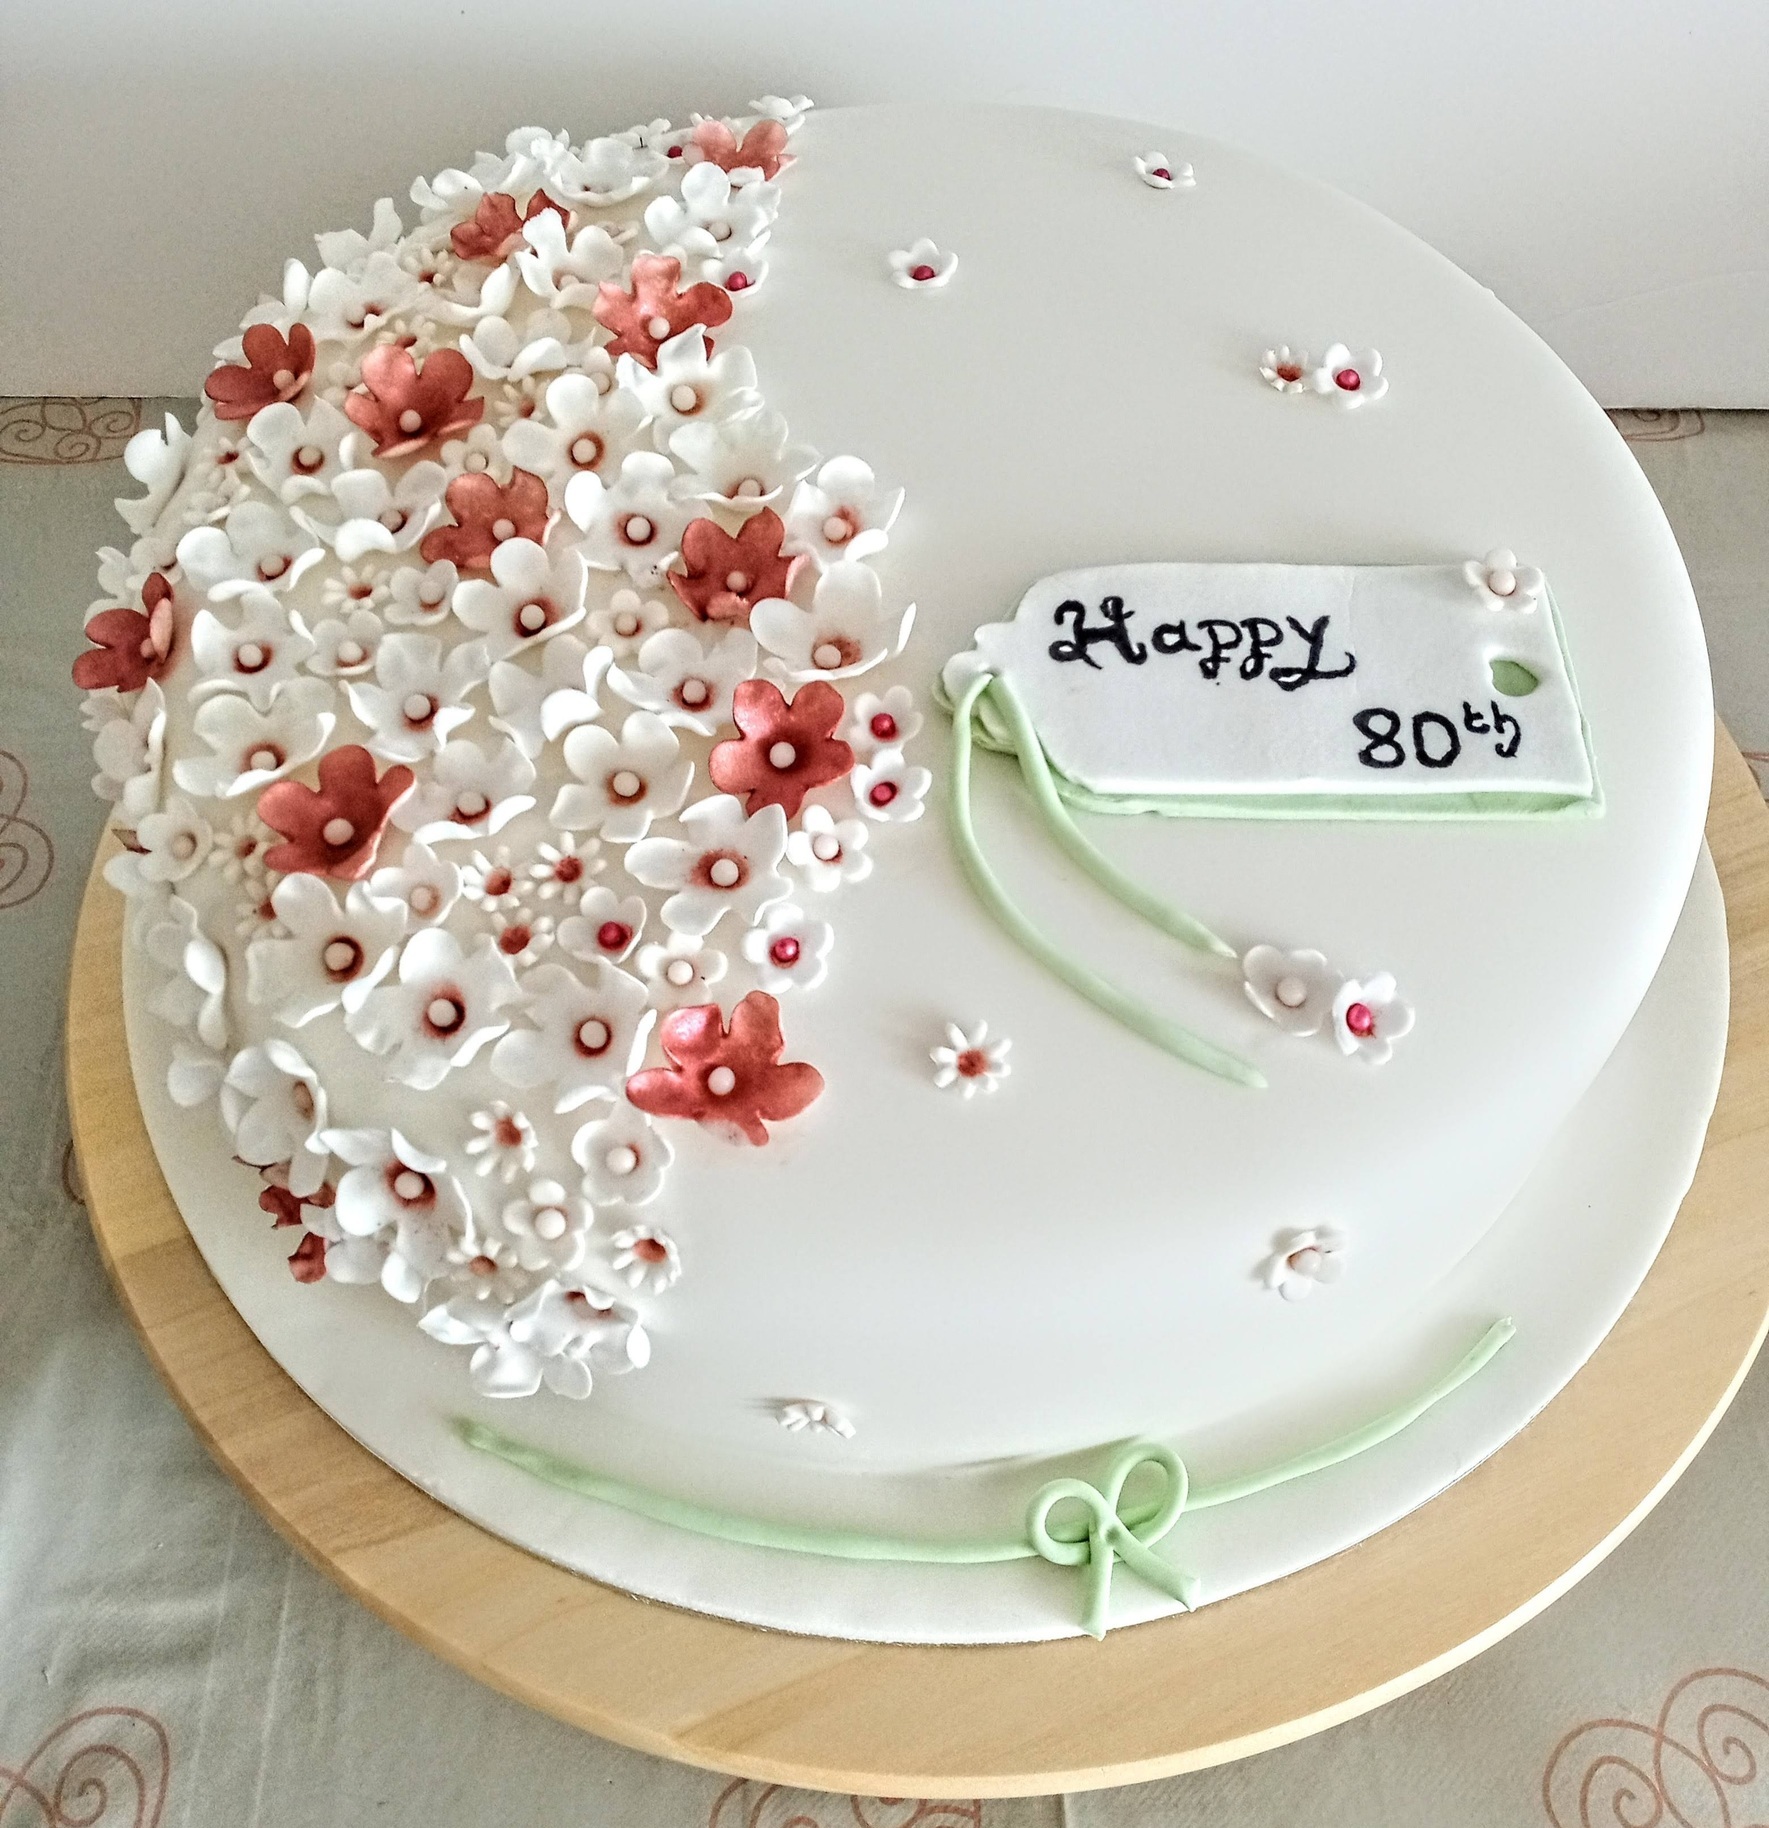 Ladies large 80th birthday cake with sugar flowers